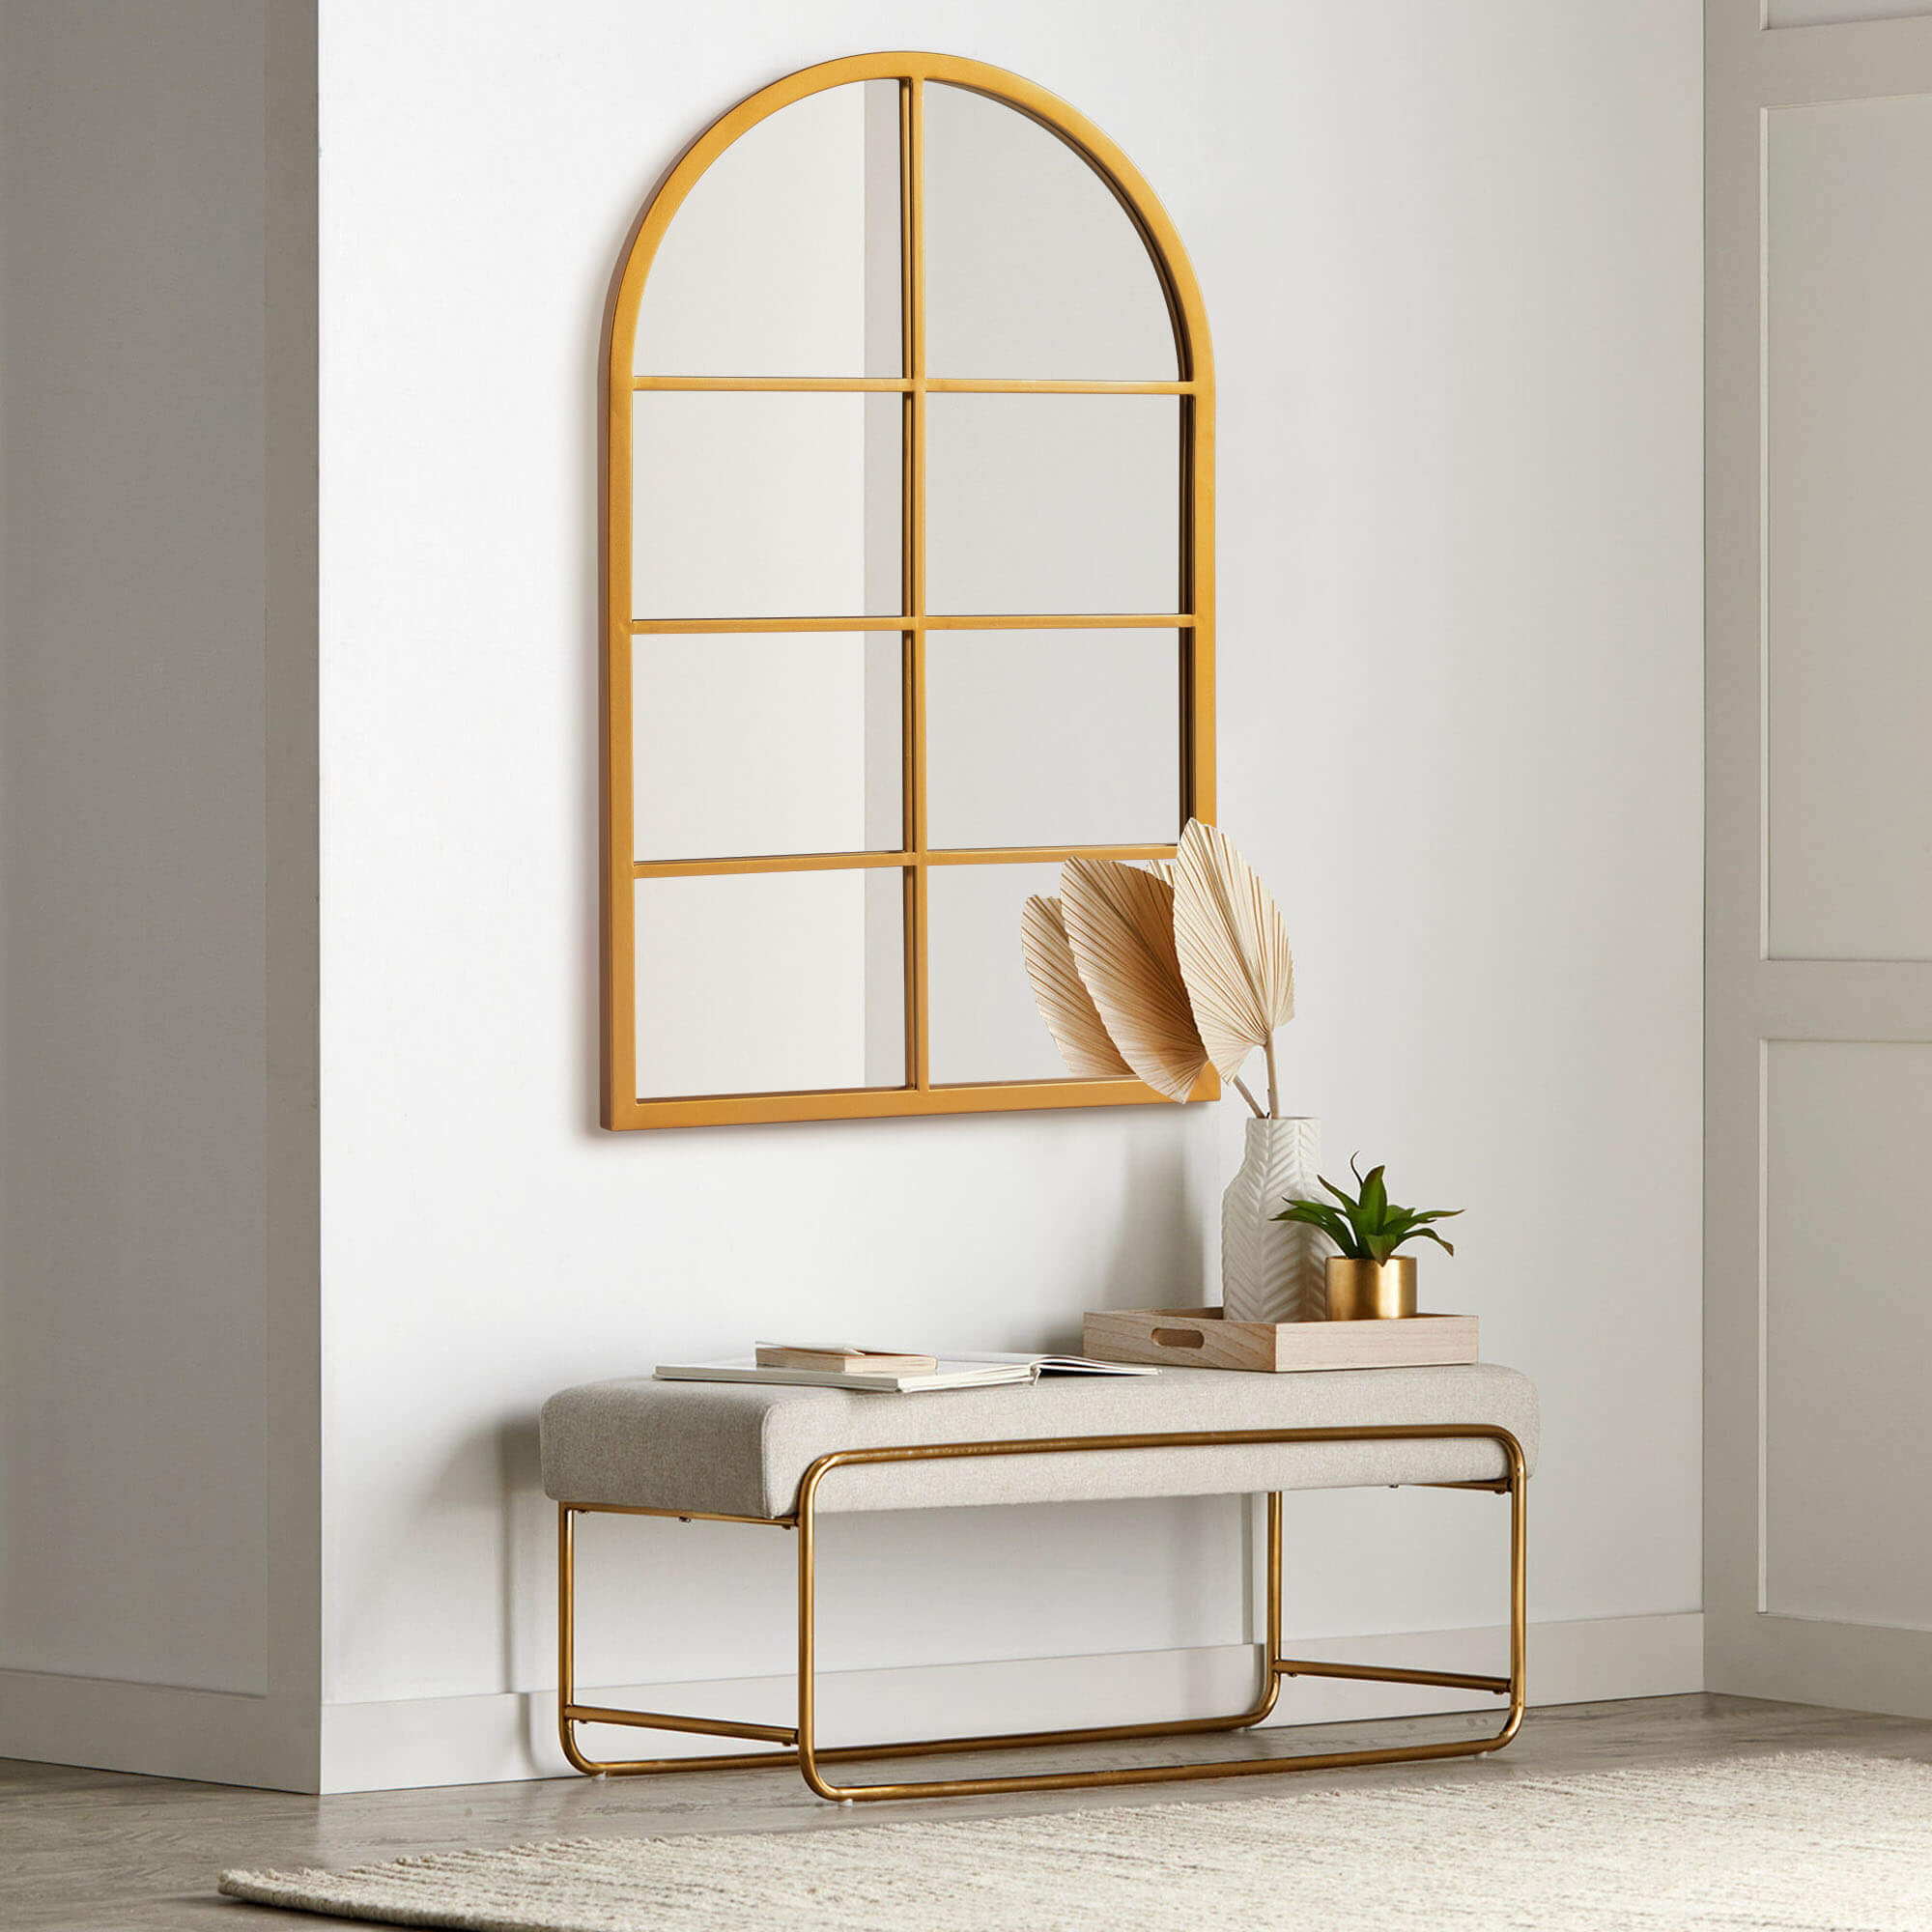 Bernice- Iron Window Pane Black & Gold Arch Decorative Wall Mirror